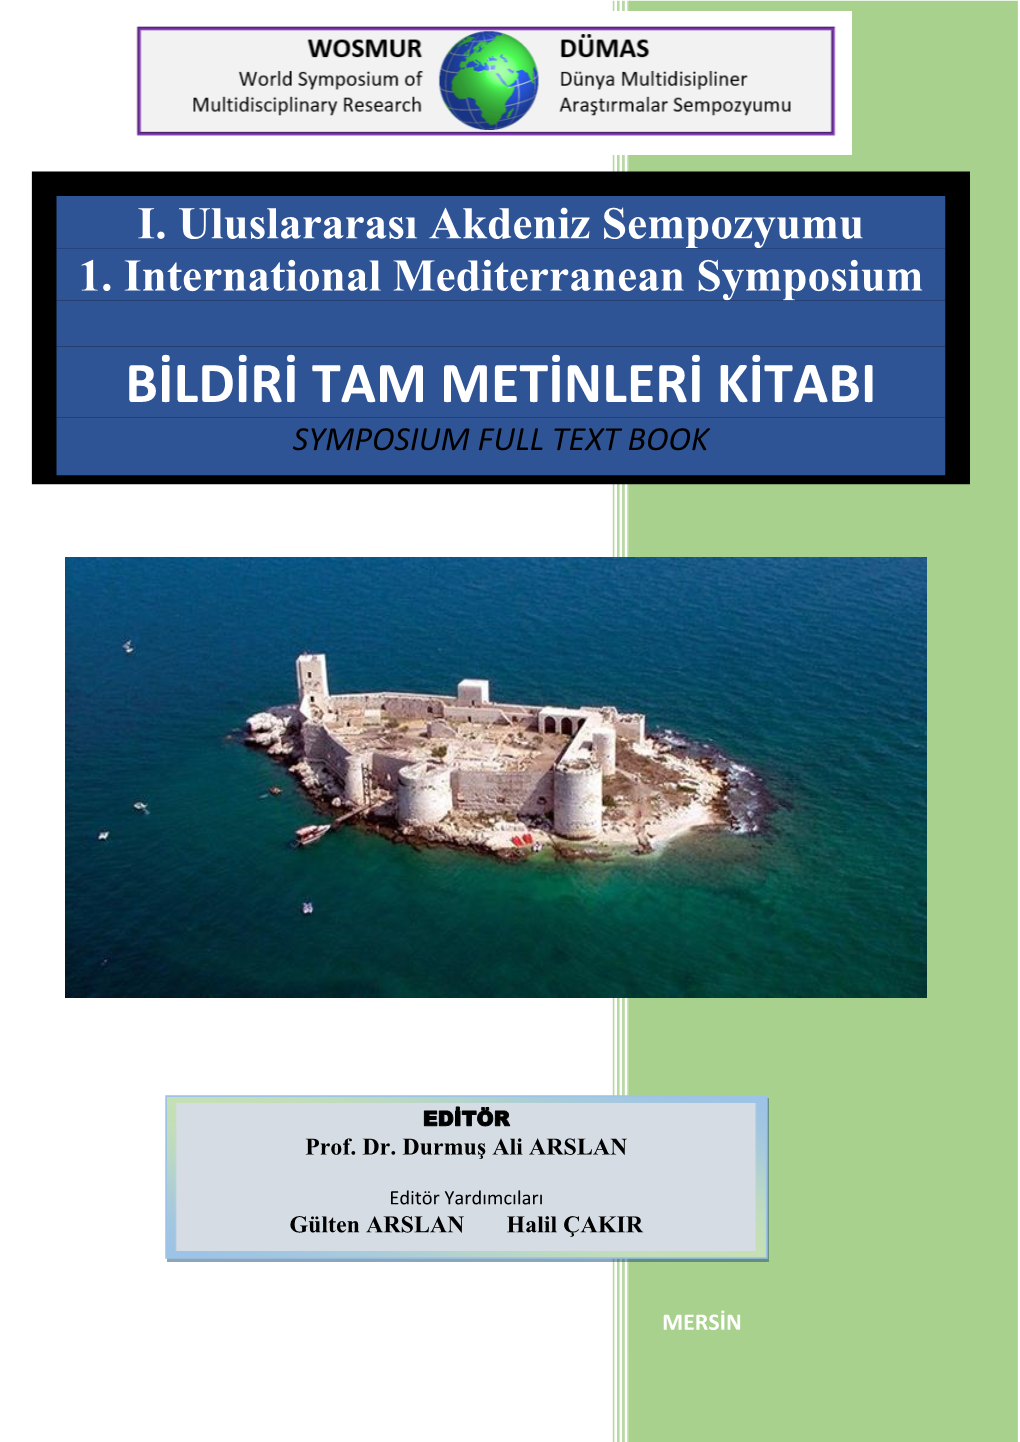 I. Uluslararası Akdeniz Sempozyumu 1. International Mediterranean Symposium